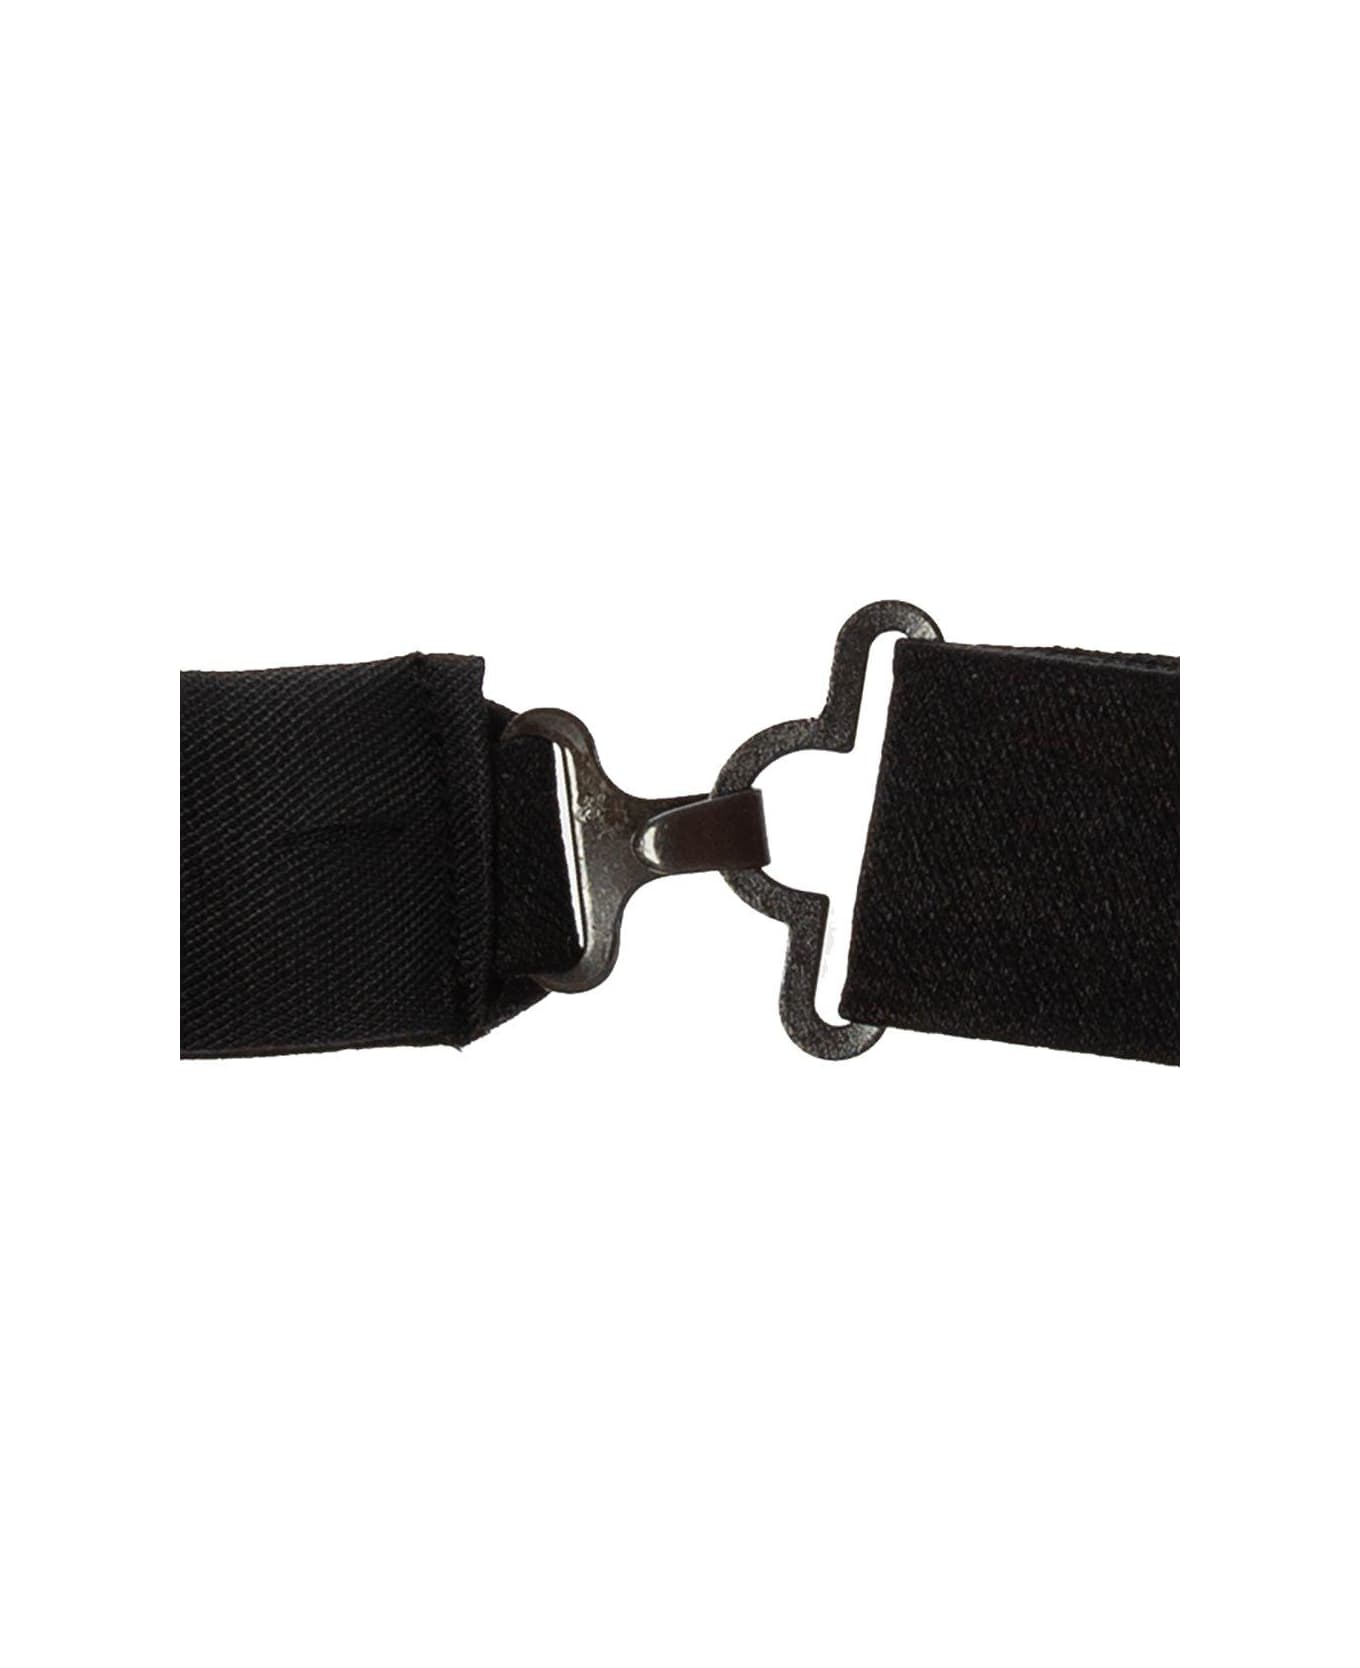 Givenchy Papillon Hook-clipped Bow Tie - NERO